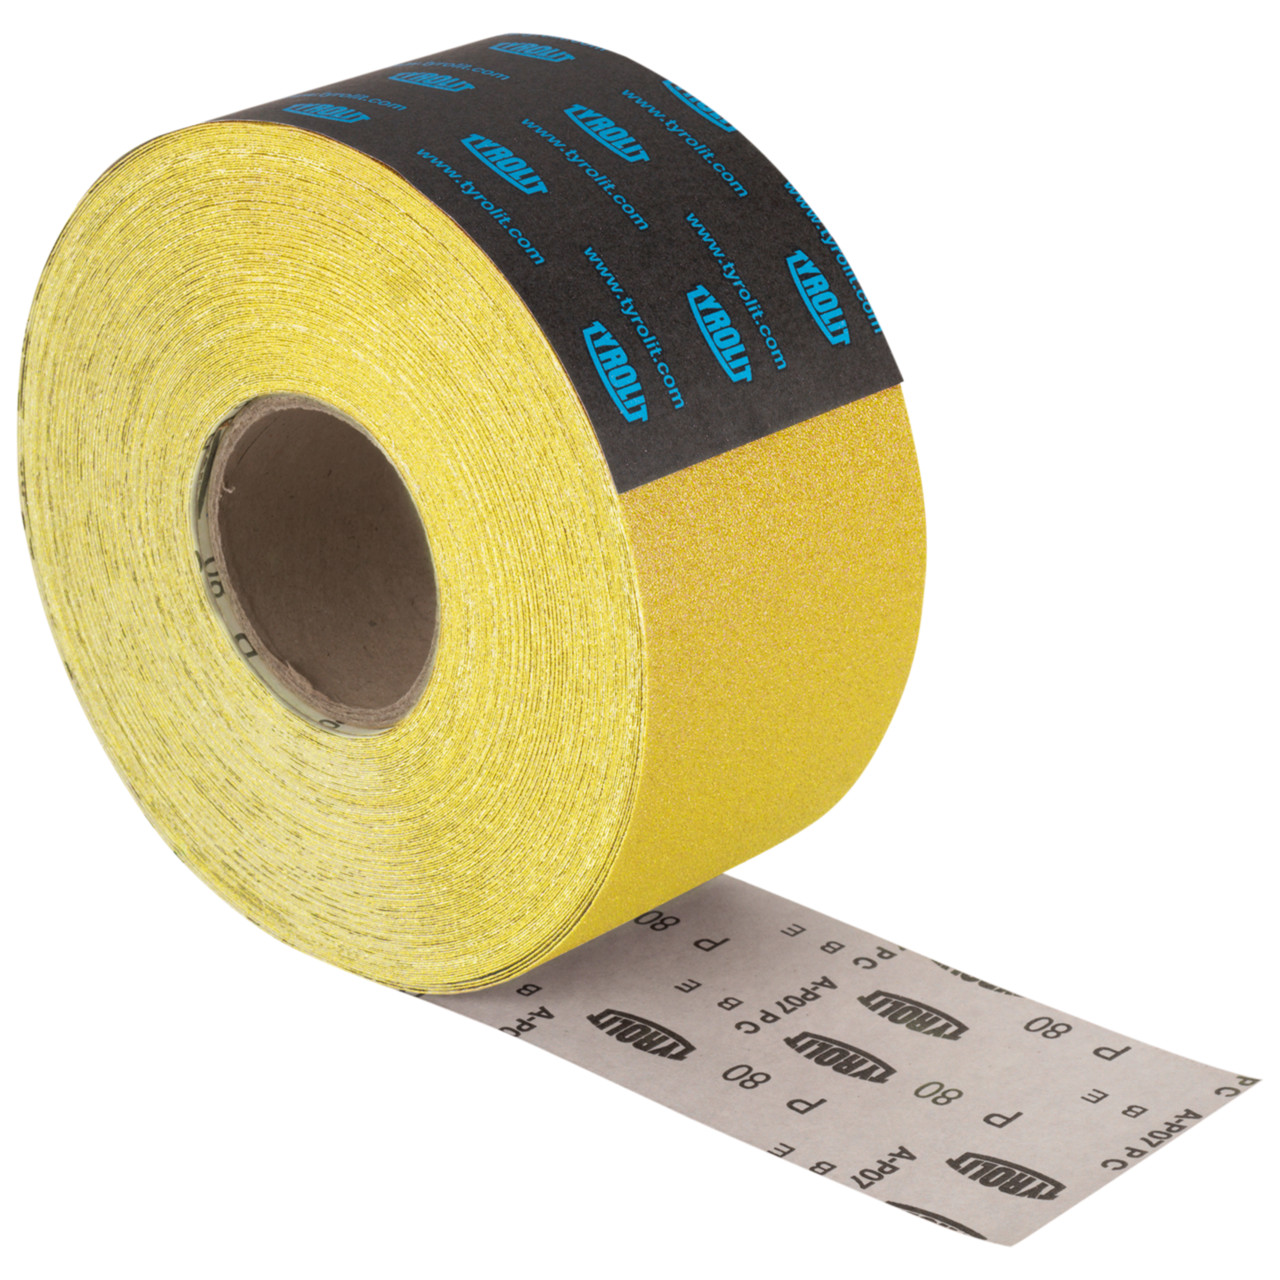 TYROLIT A-P21 D Paper rolls TxH 115x50 For plastic, wood, paint and varnish, P150, shape: ROLL, Art. 34230641